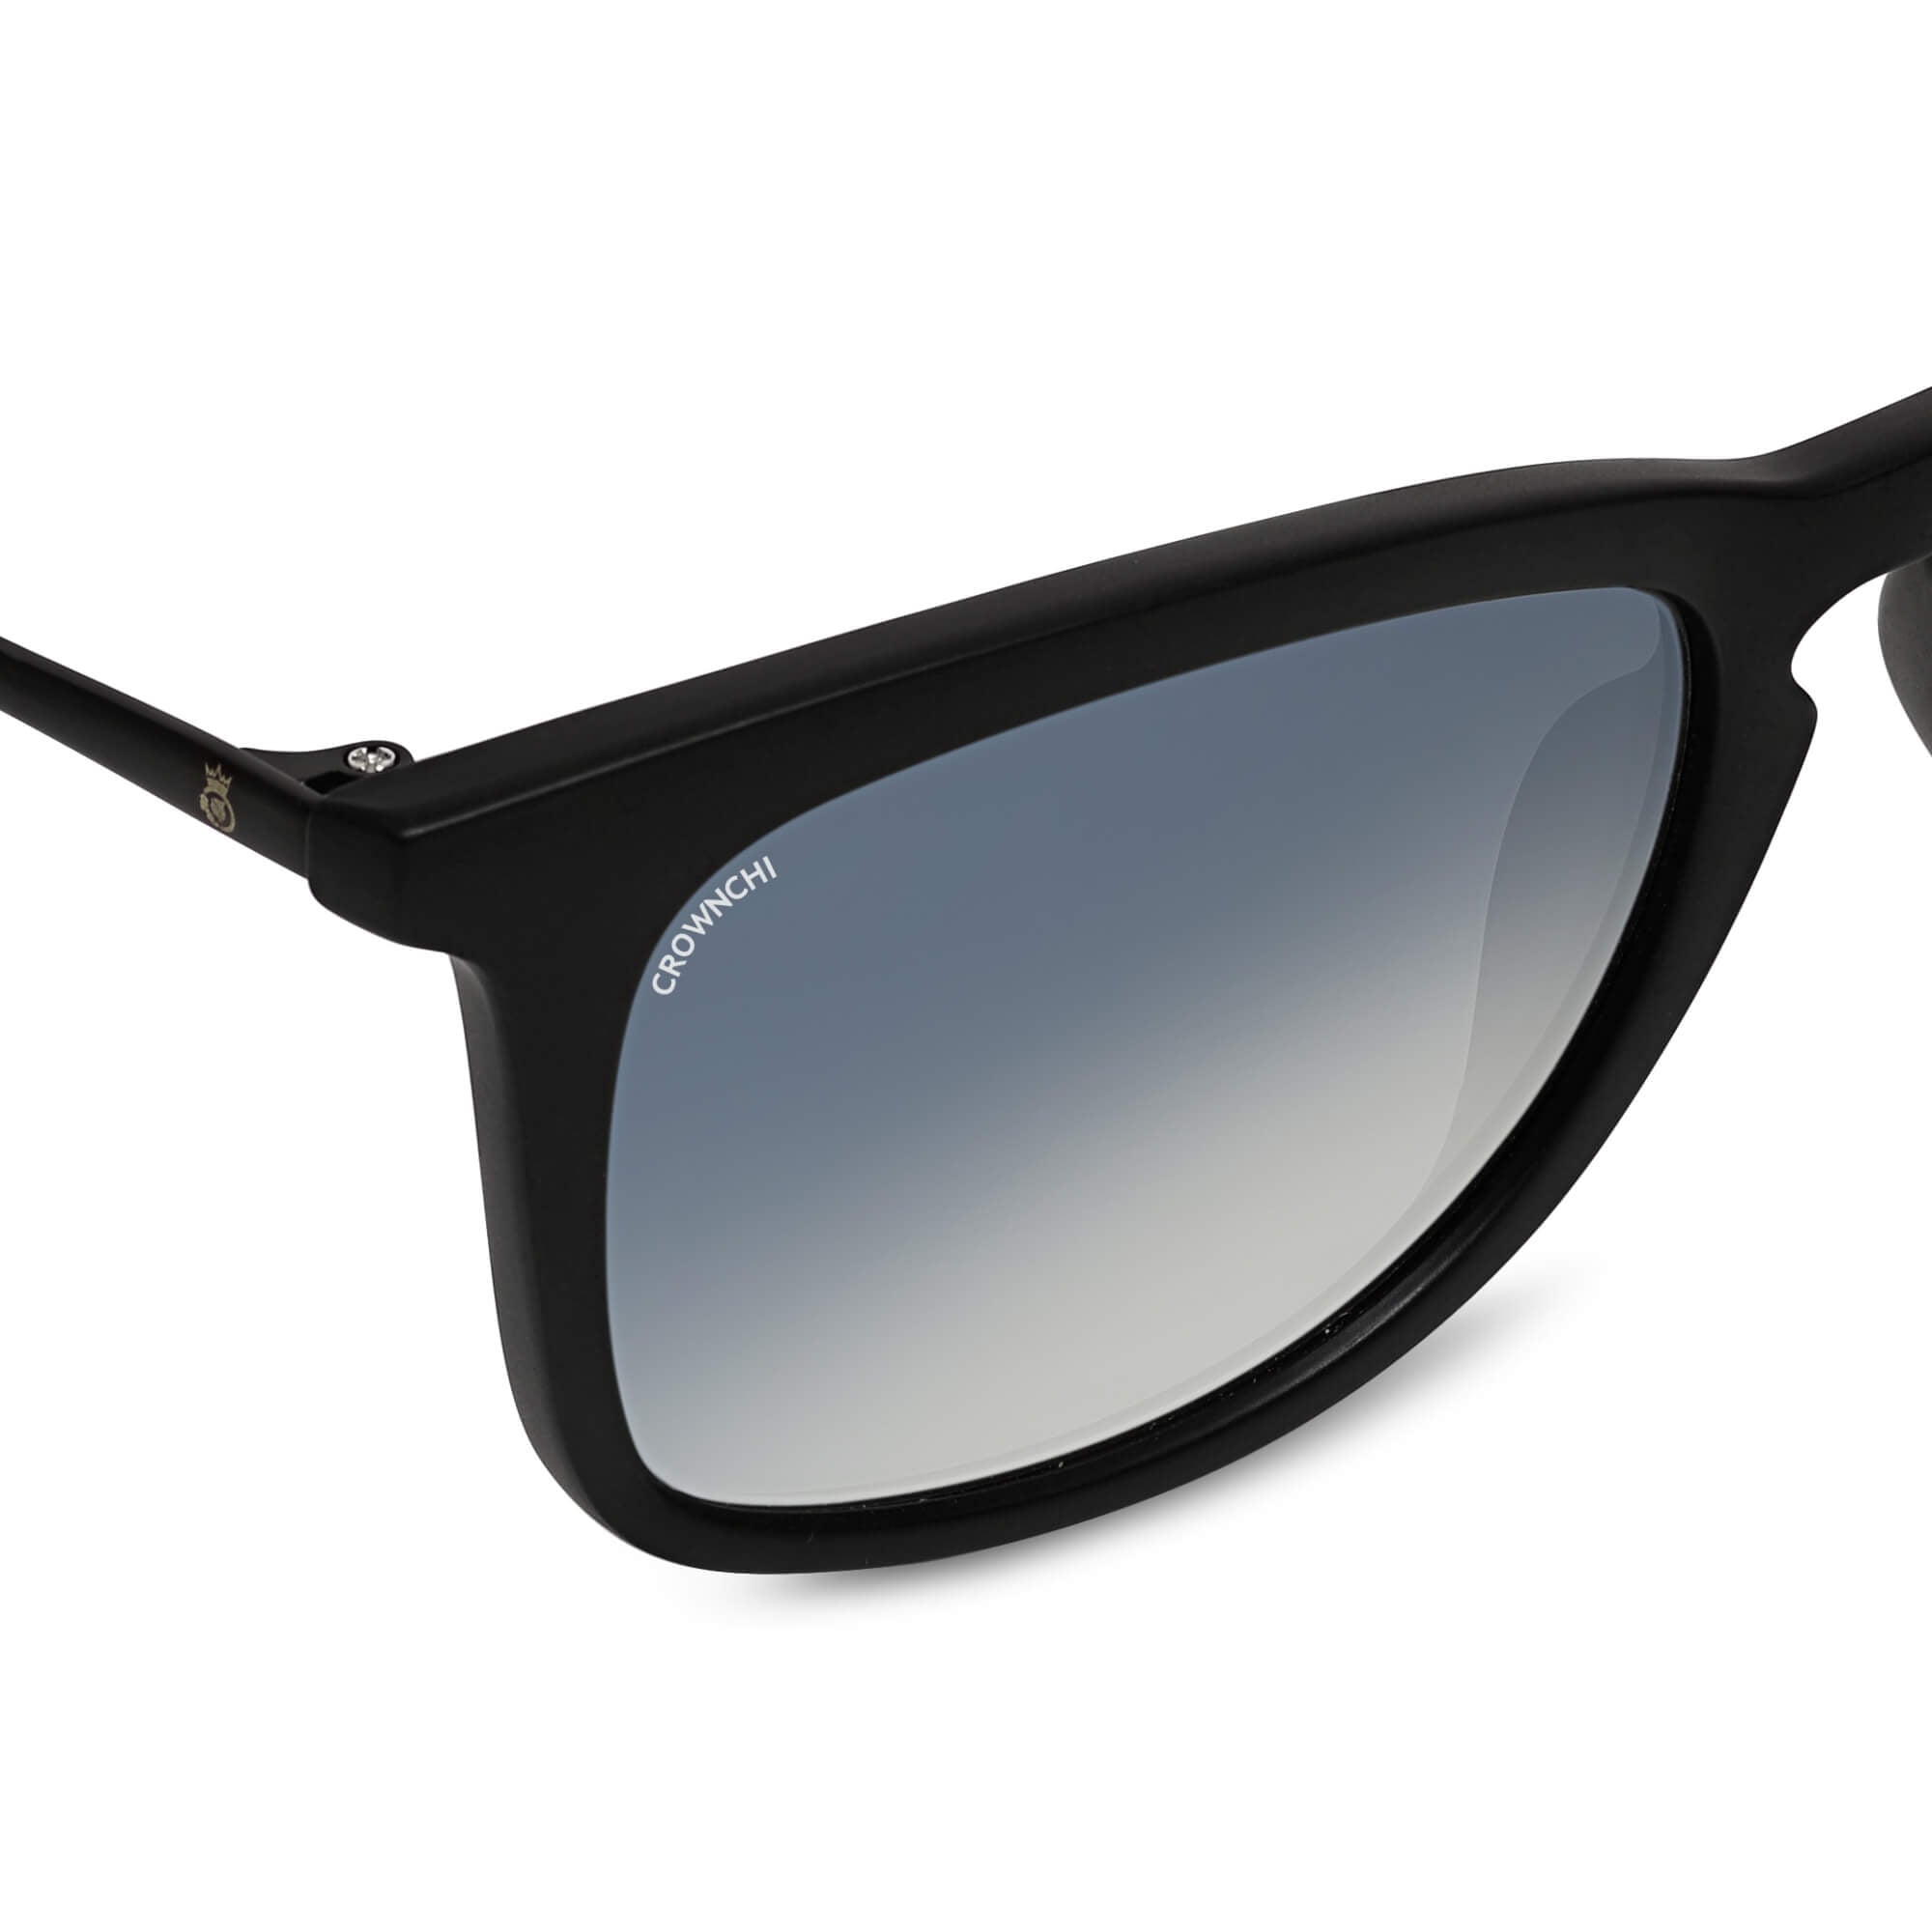 Sparrow Black Gradient Square Edition Sunglasses